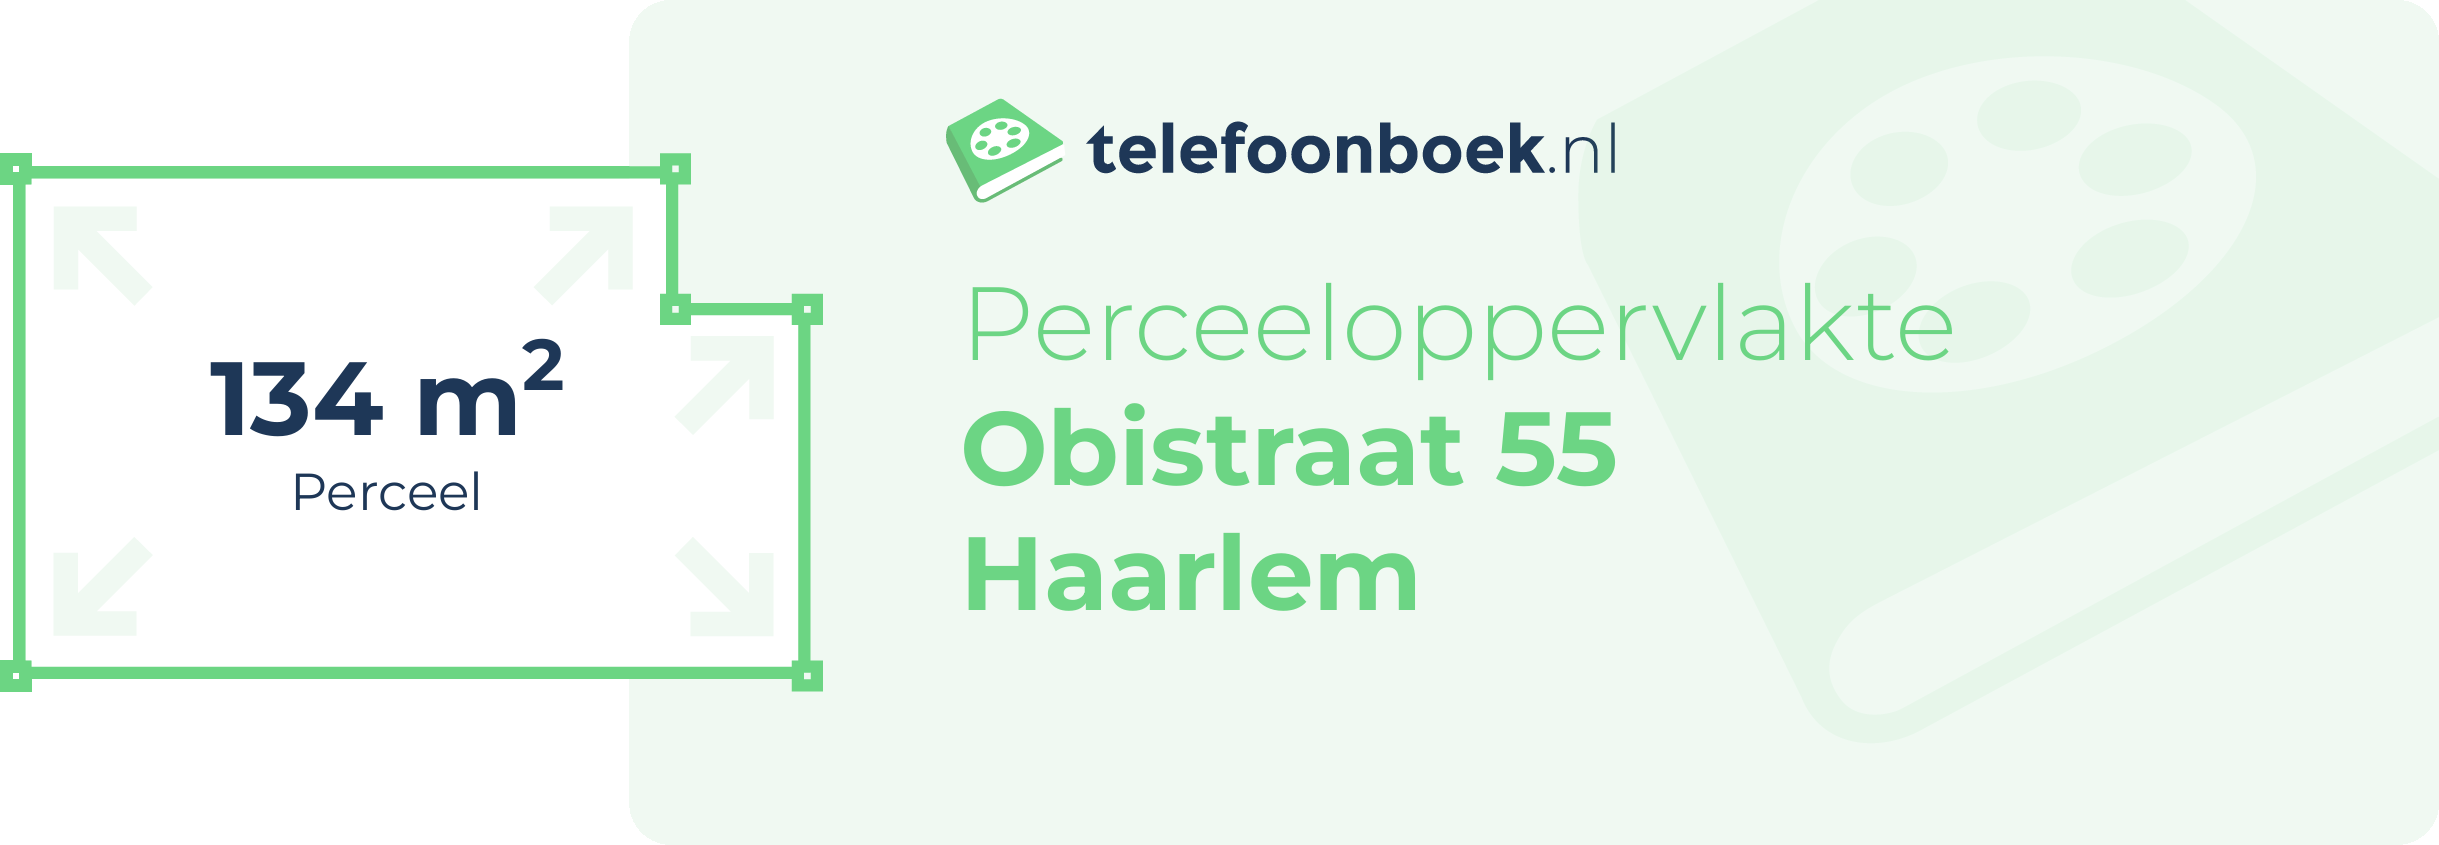 Perceeloppervlakte Obistraat 55 Haarlem